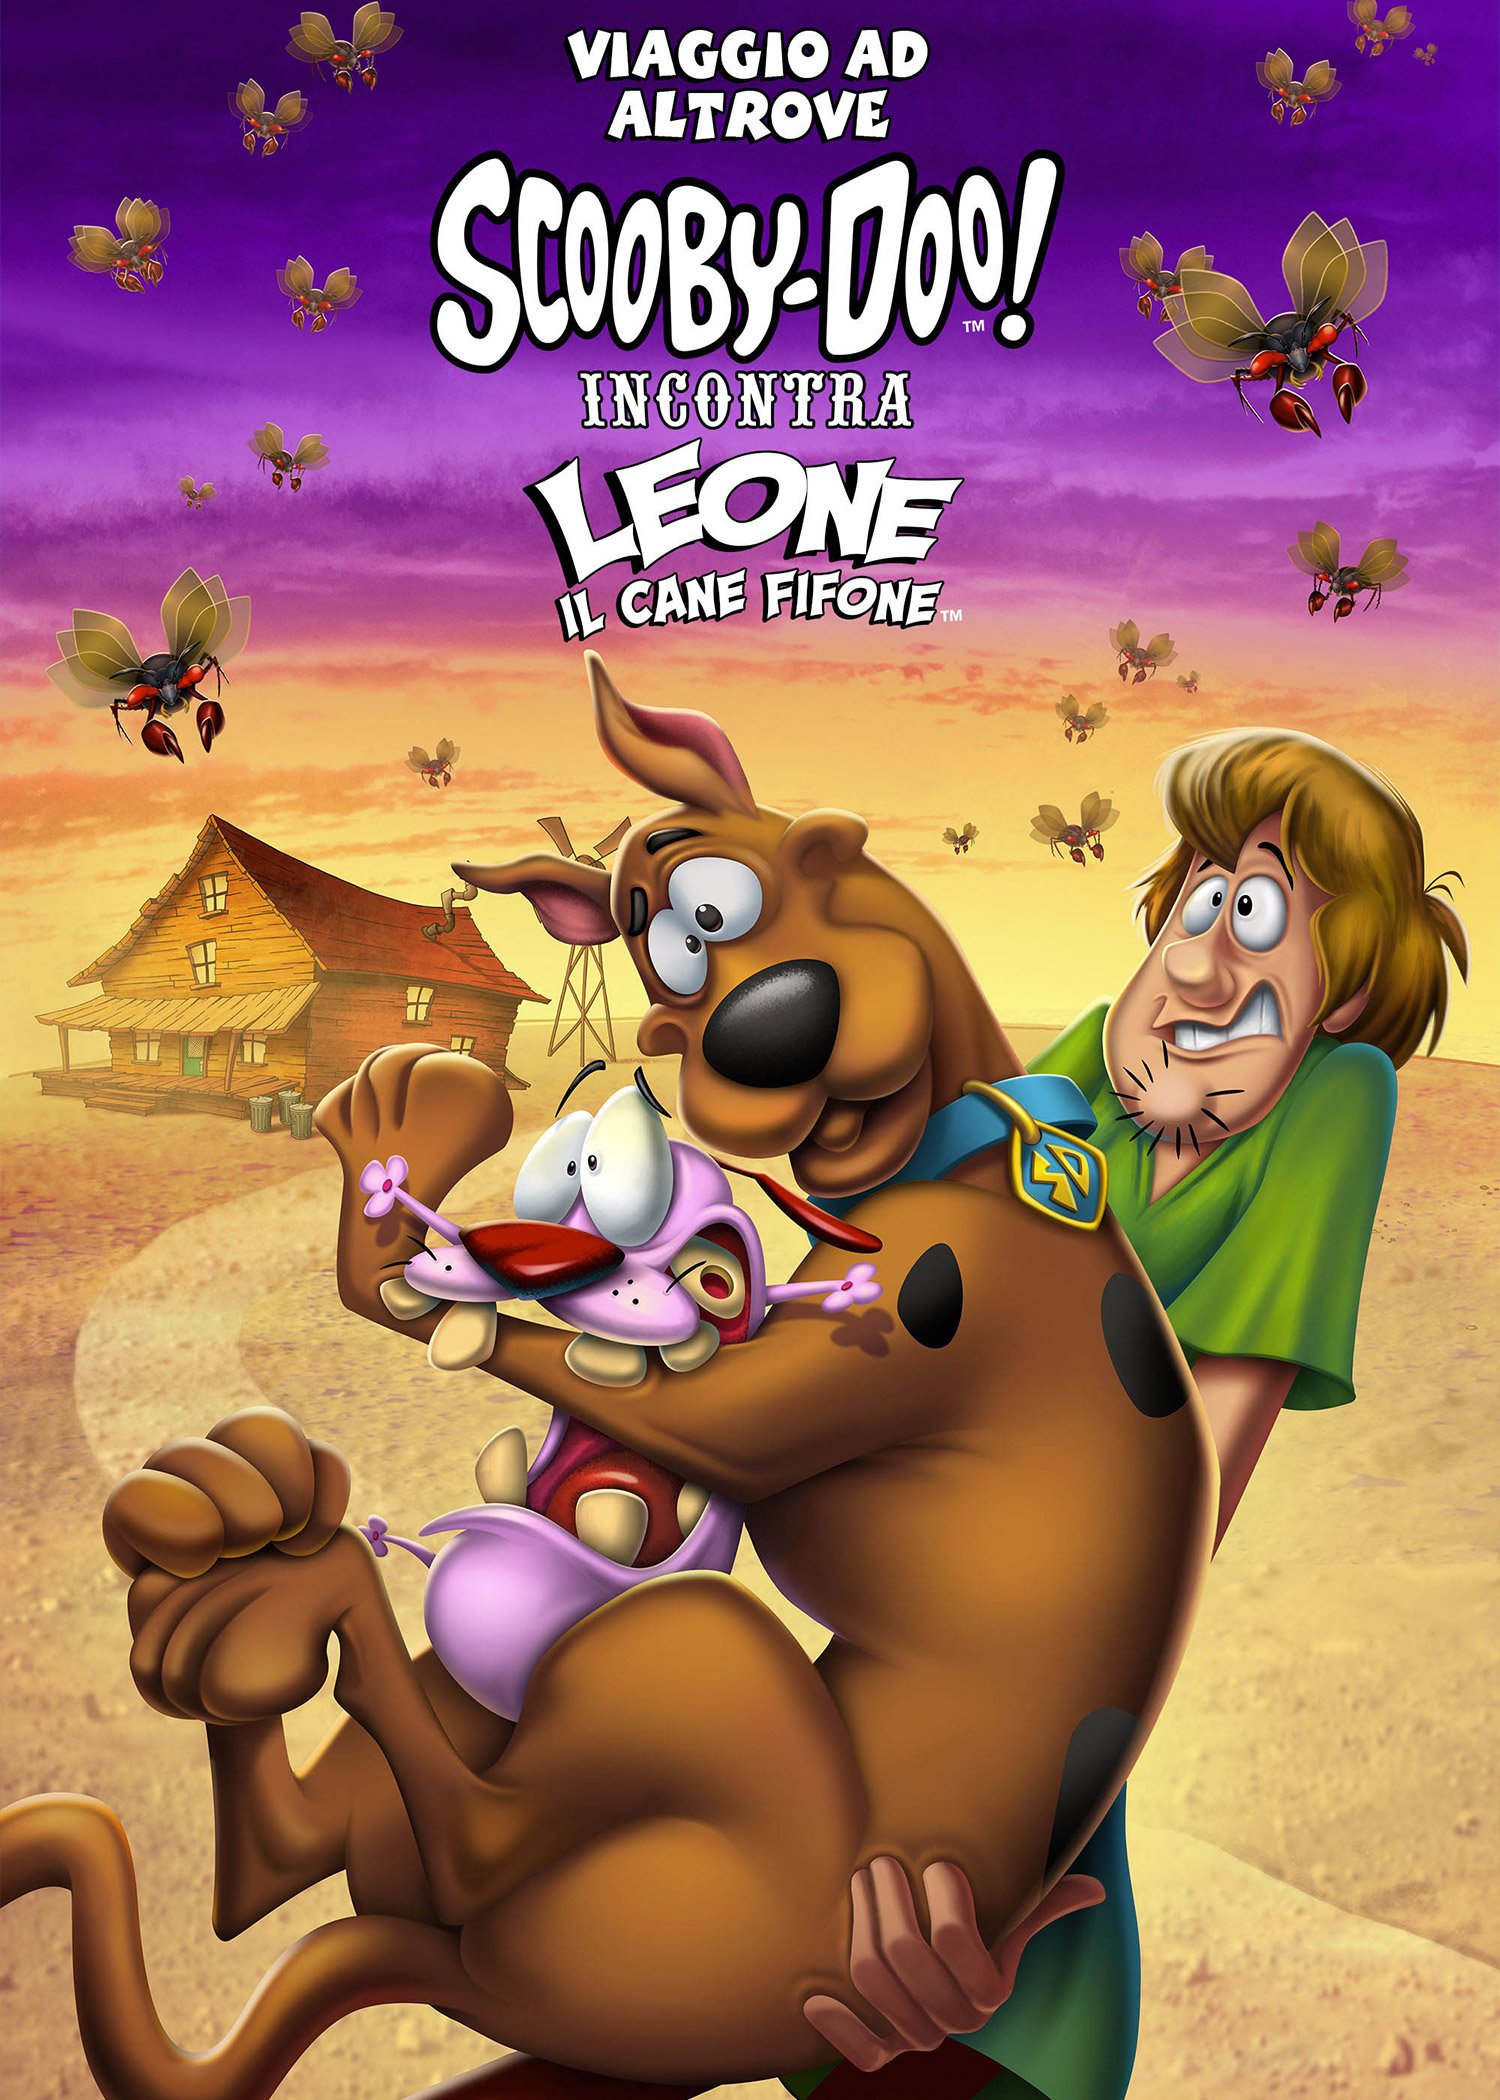 Leone il cane fifone (Serie TV 1999 - 2002): trama, foto 